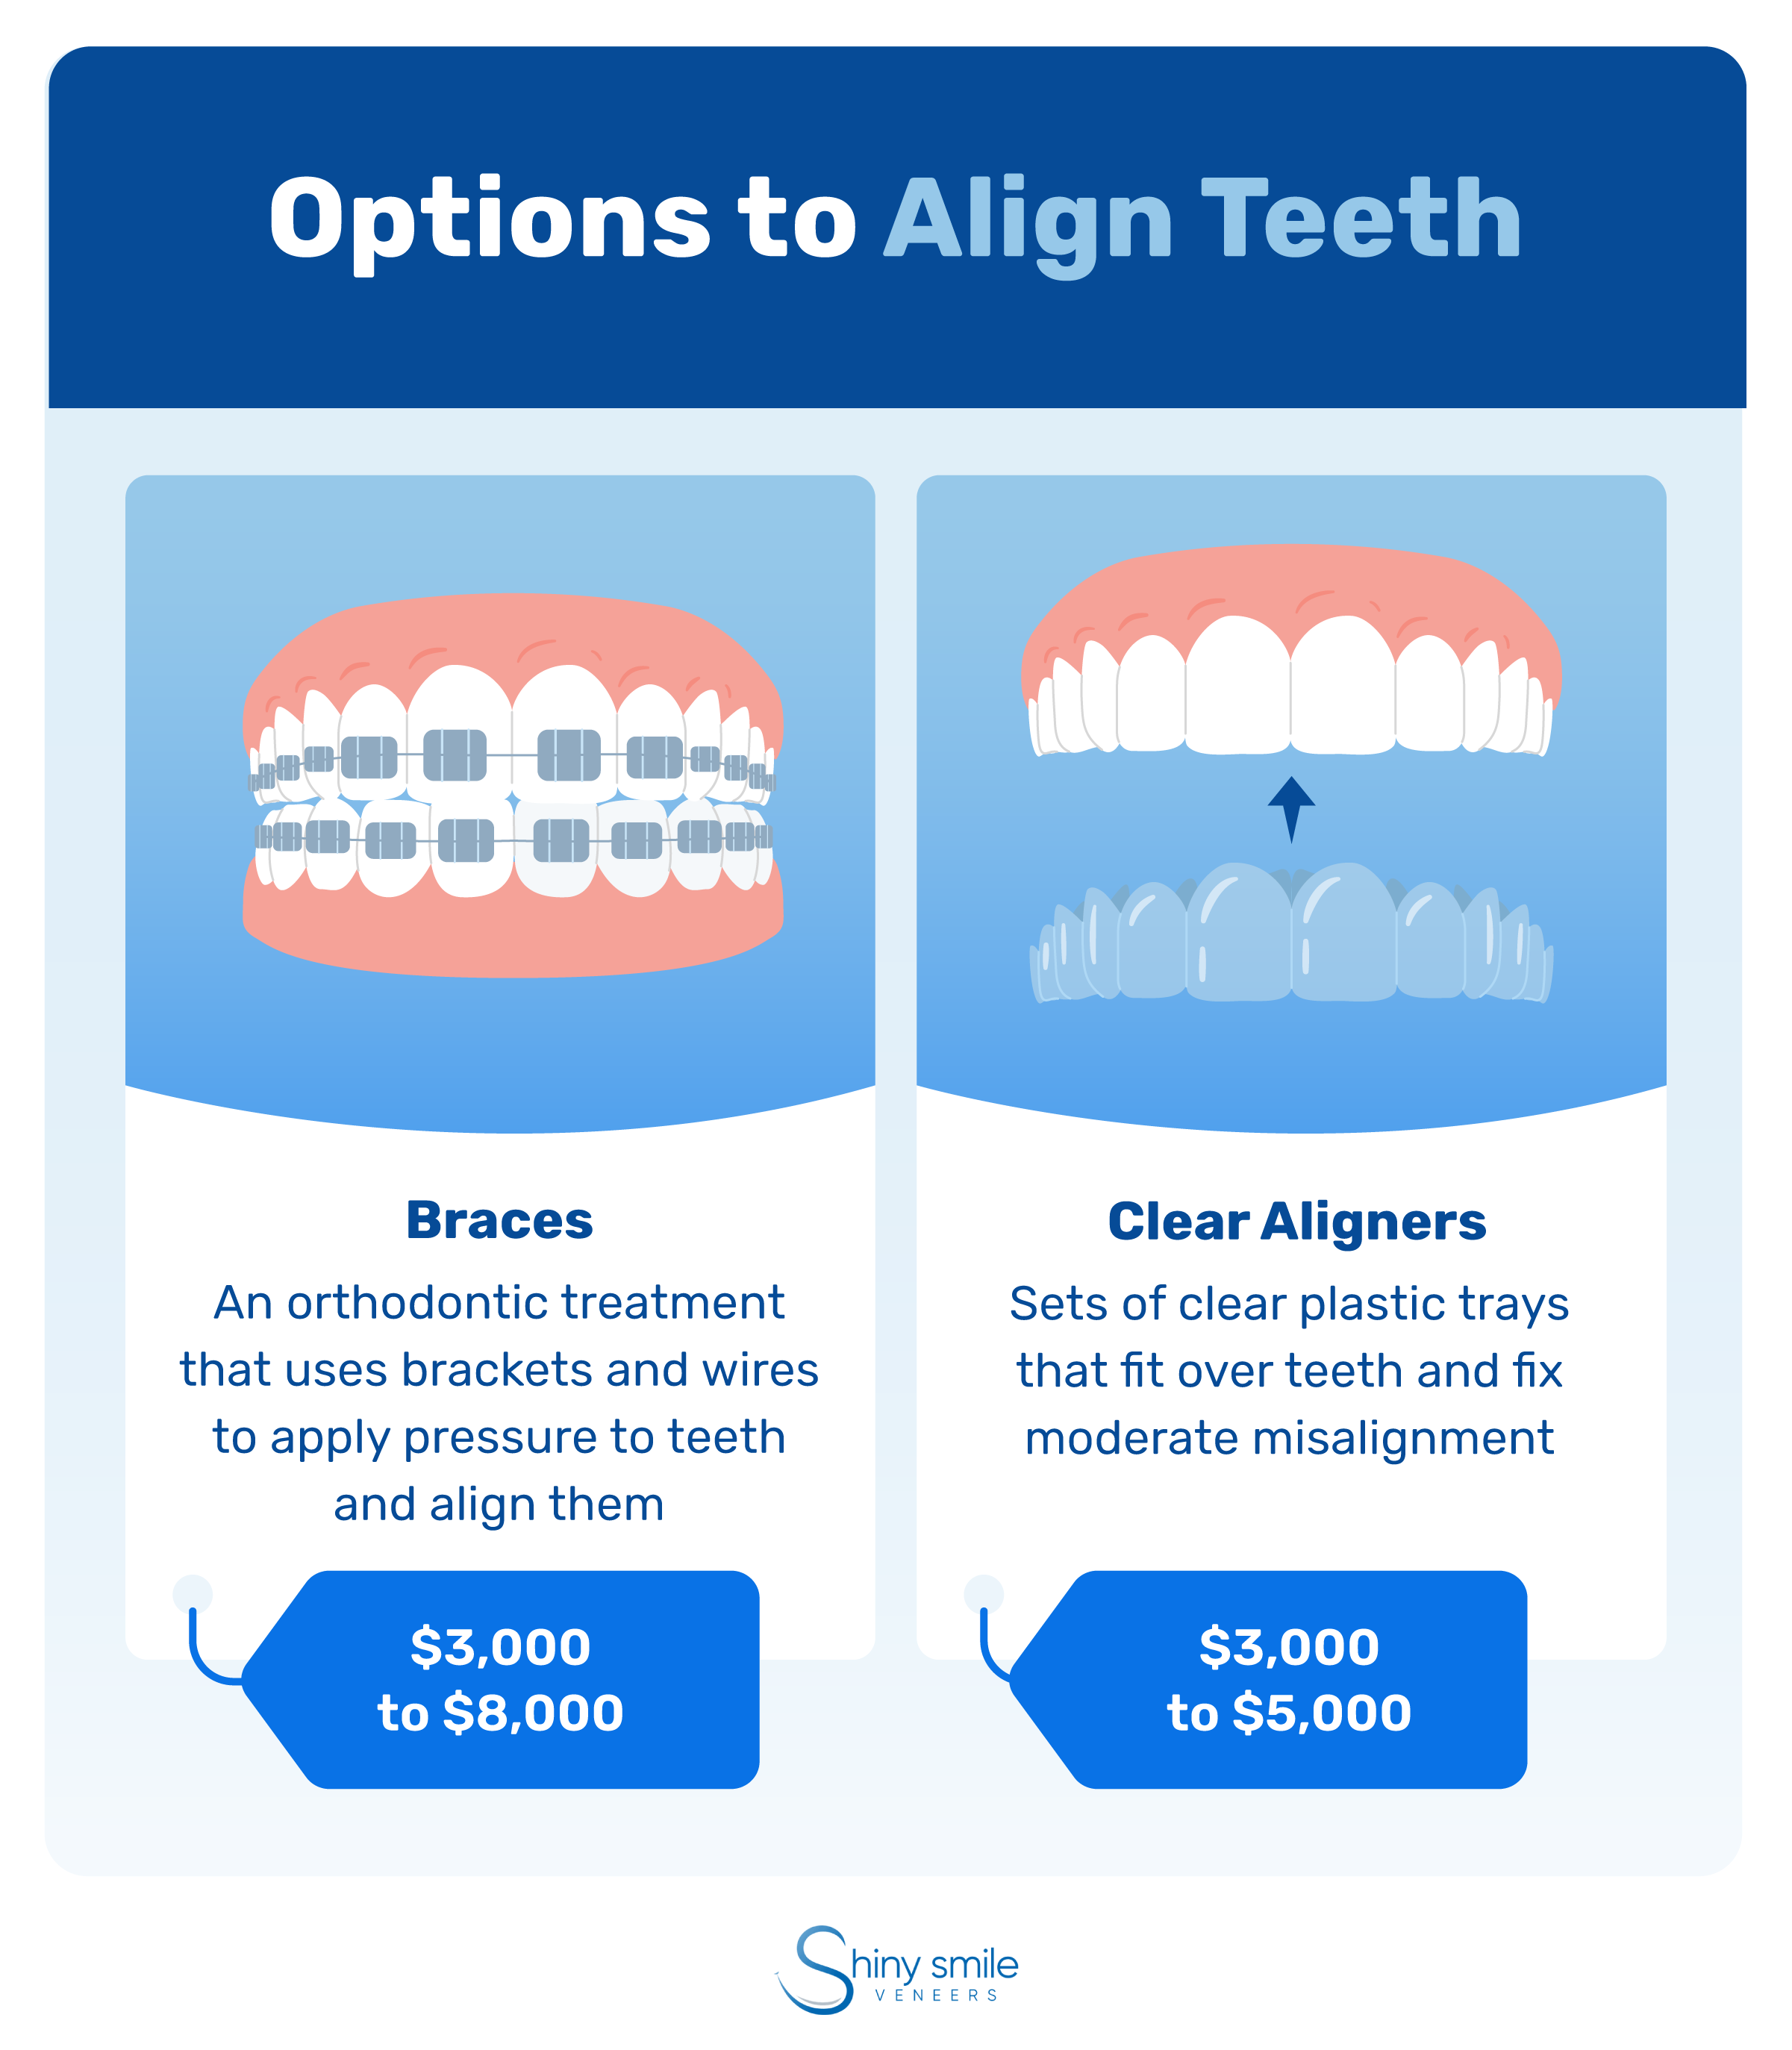 Options to align teeth